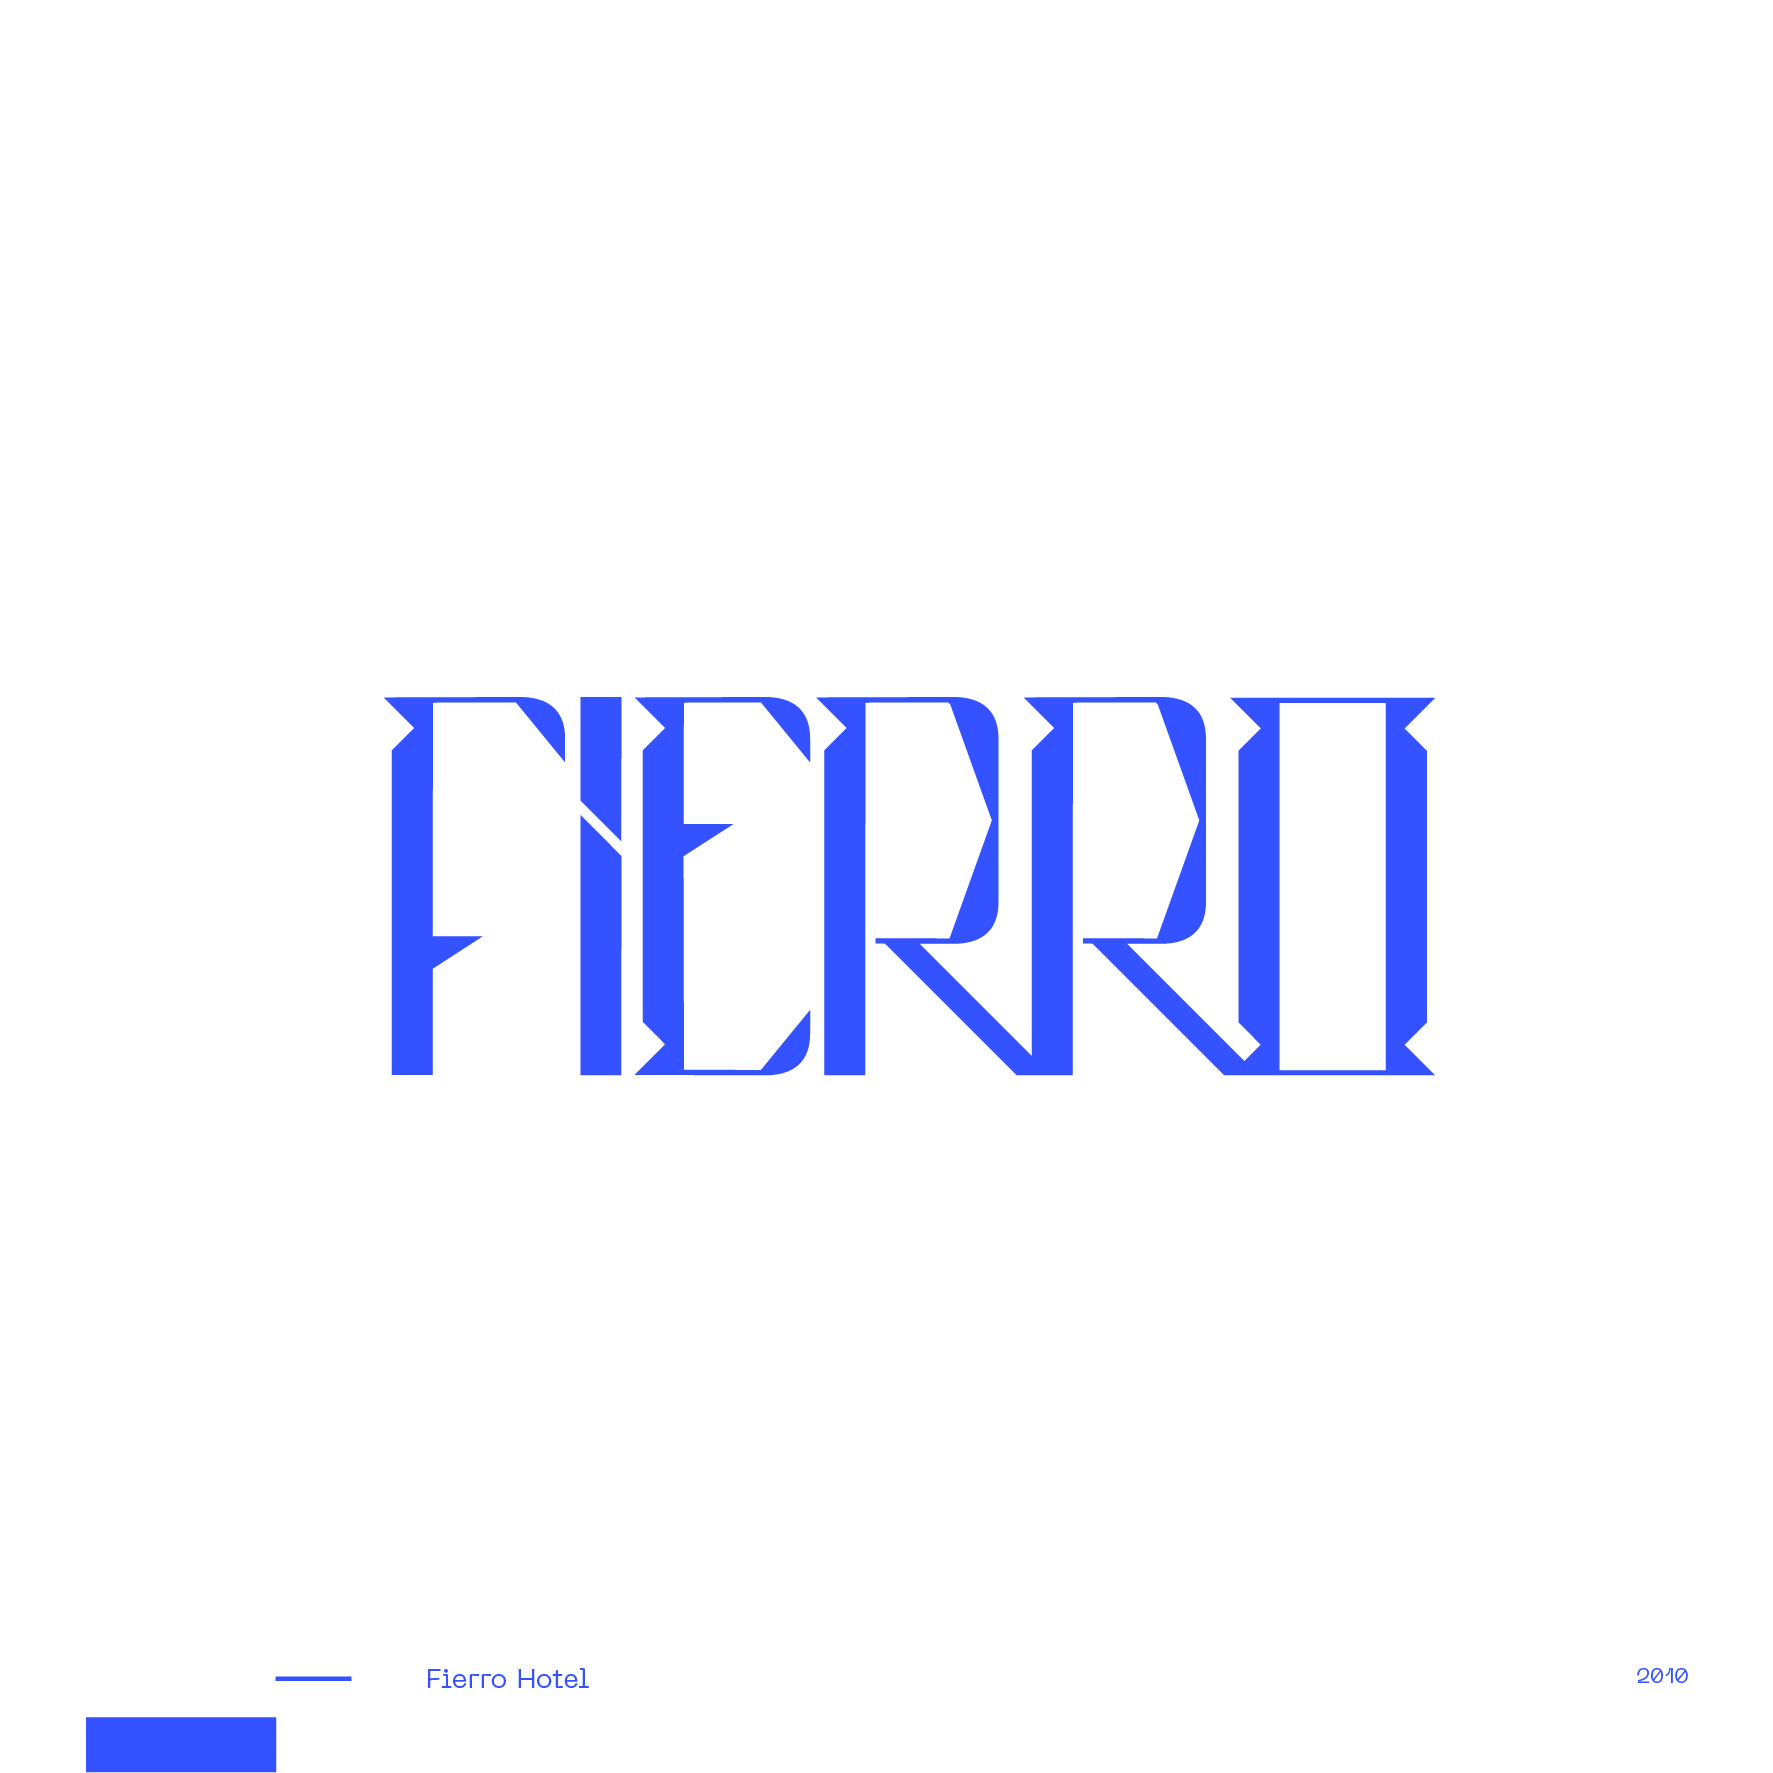 Guapo_Design_Studio_Logotype_Collection_Fierro-1